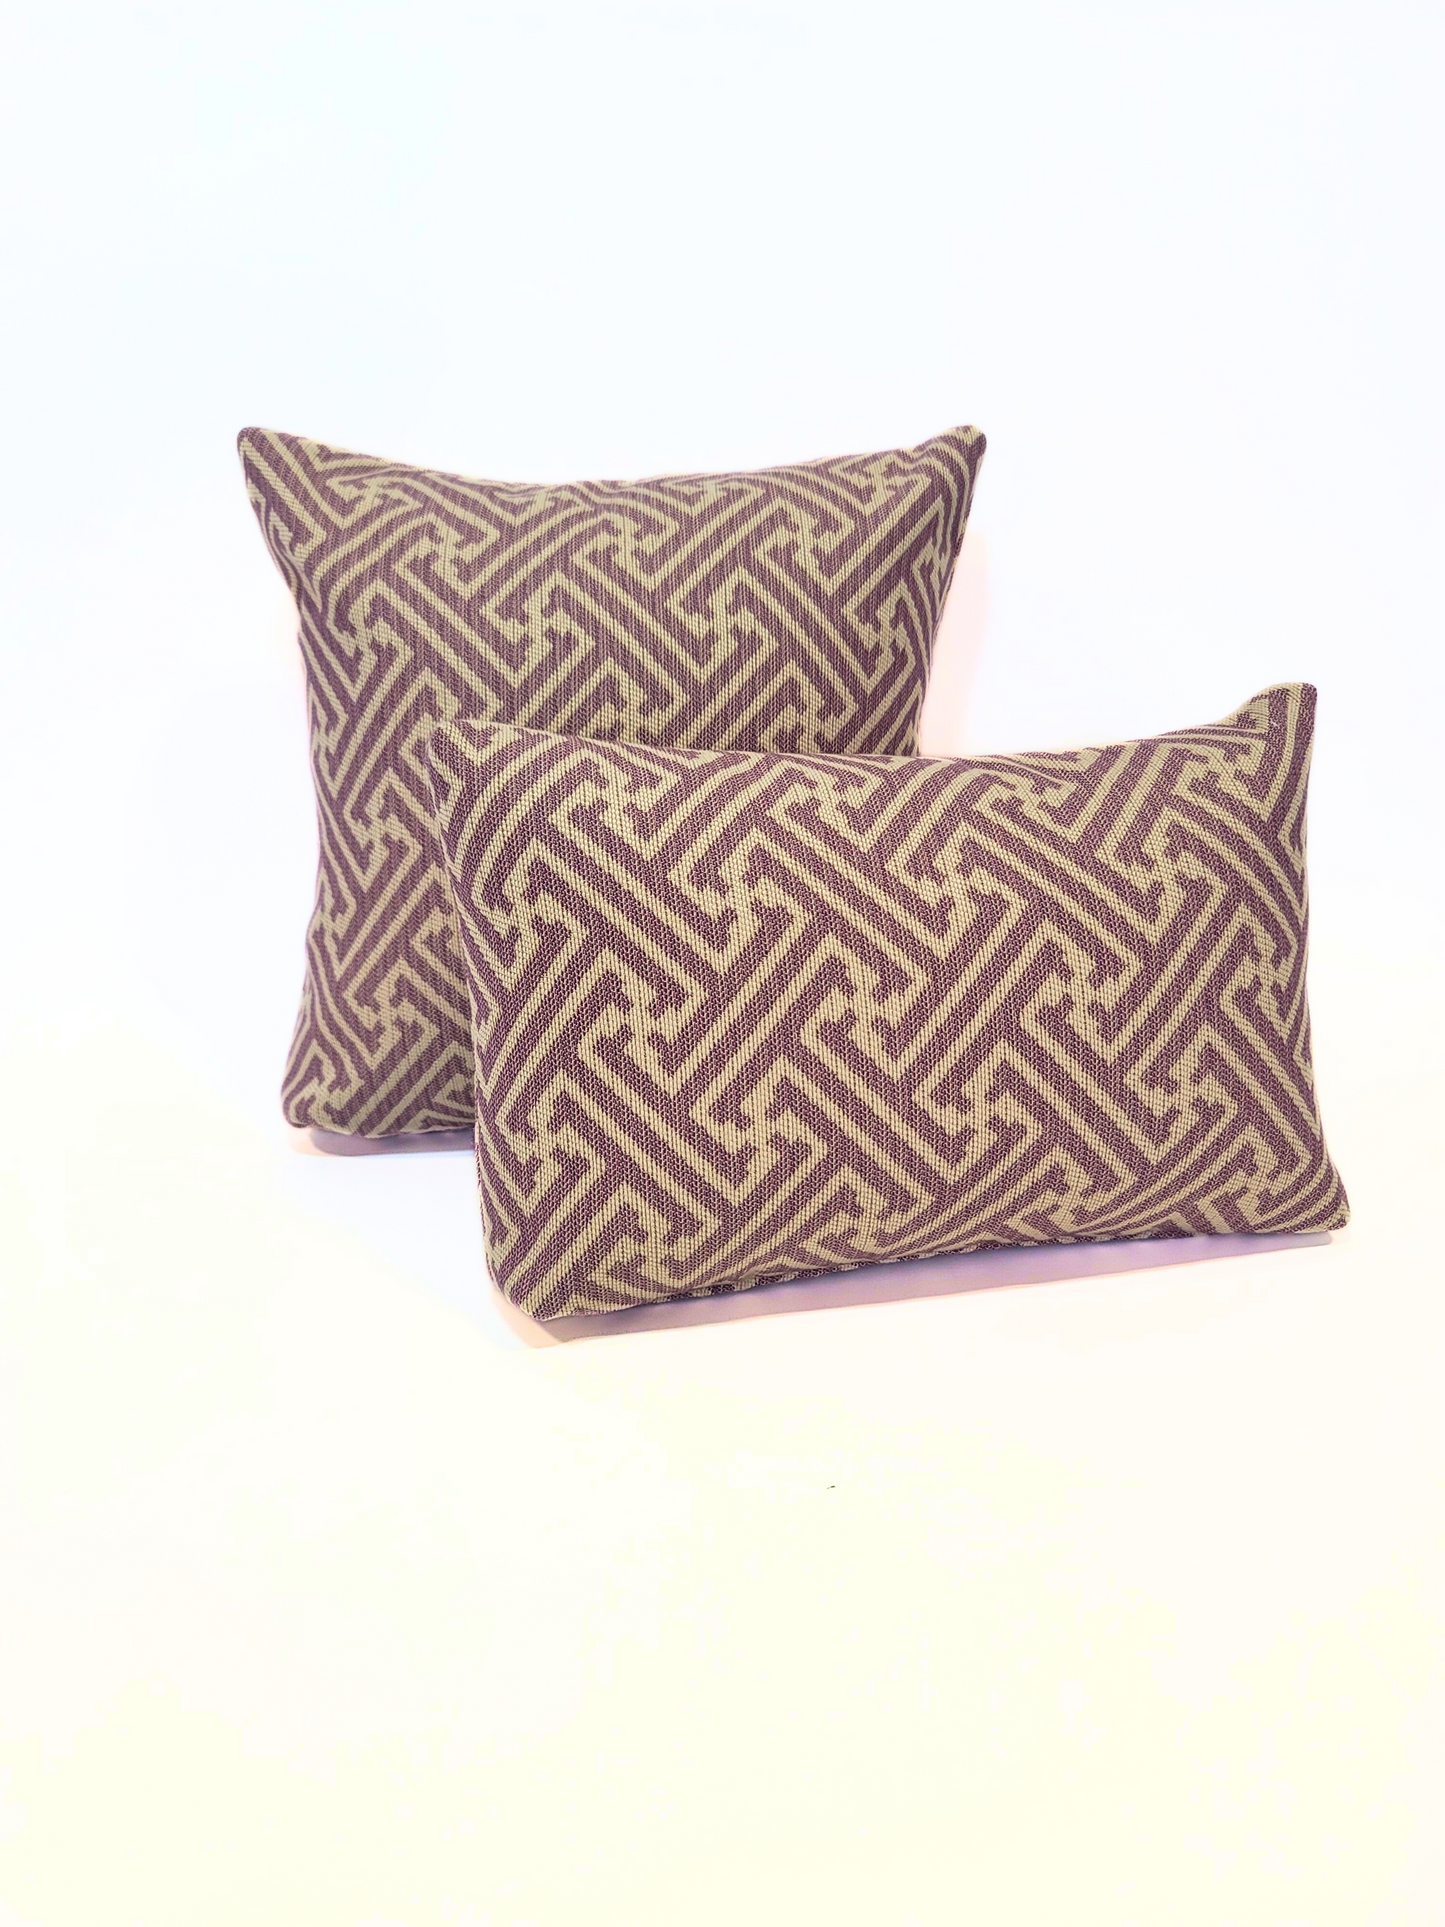 Premium Sunbrella "Meander Lilac" Indoor/Outdoor Toss Pillow Cover